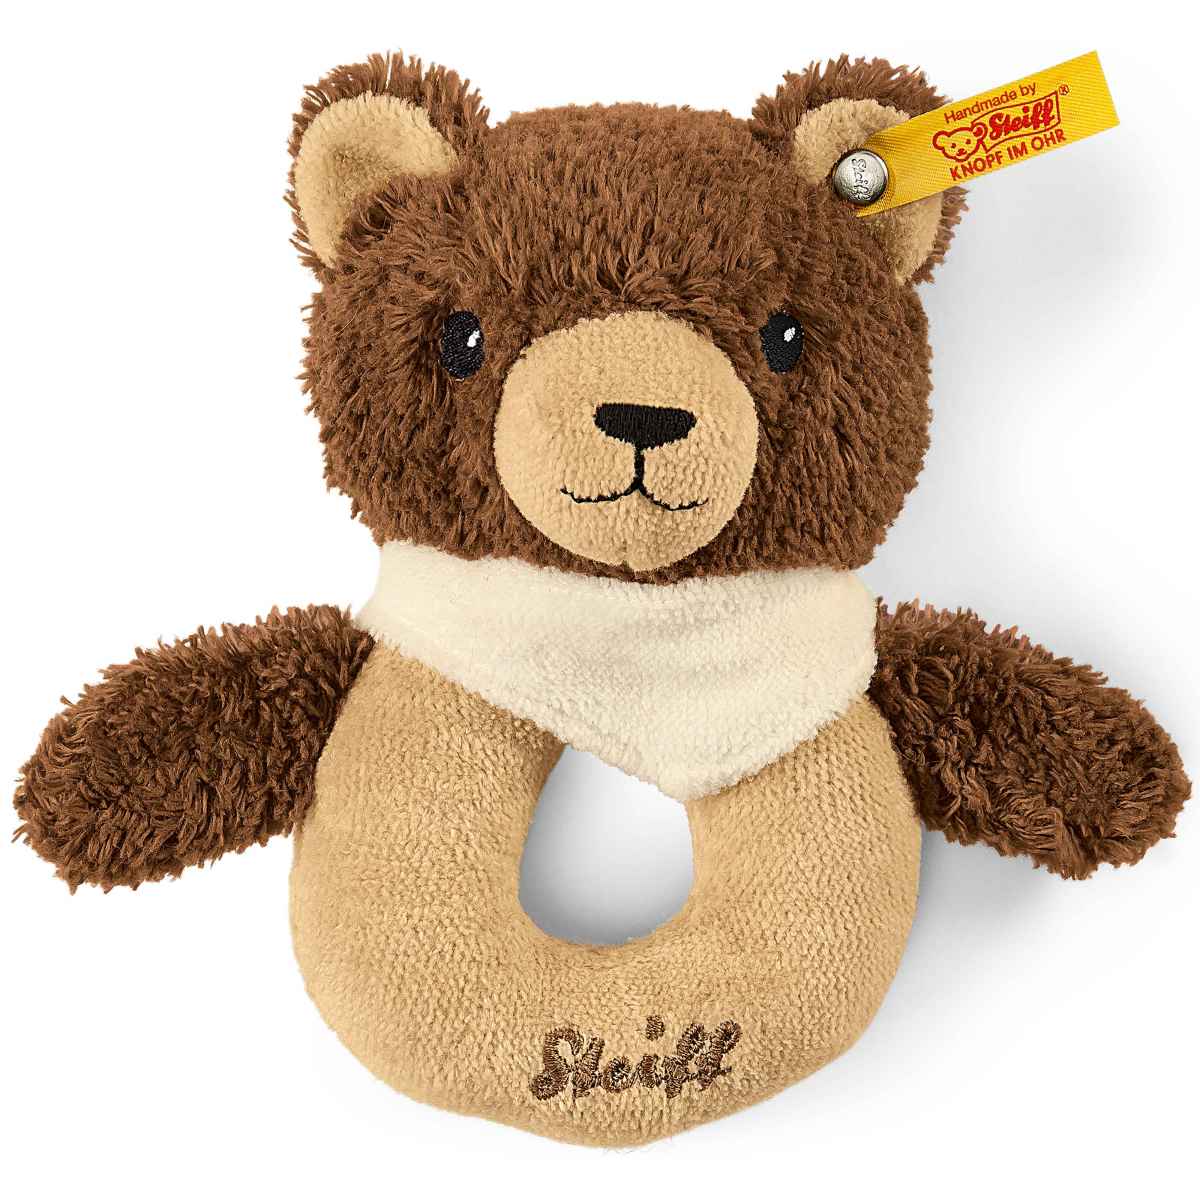 Мягкая игрушка Steiff Basti Bear Grip Toy Штайф погремушка-колечко Мишка Басти бежево-кор